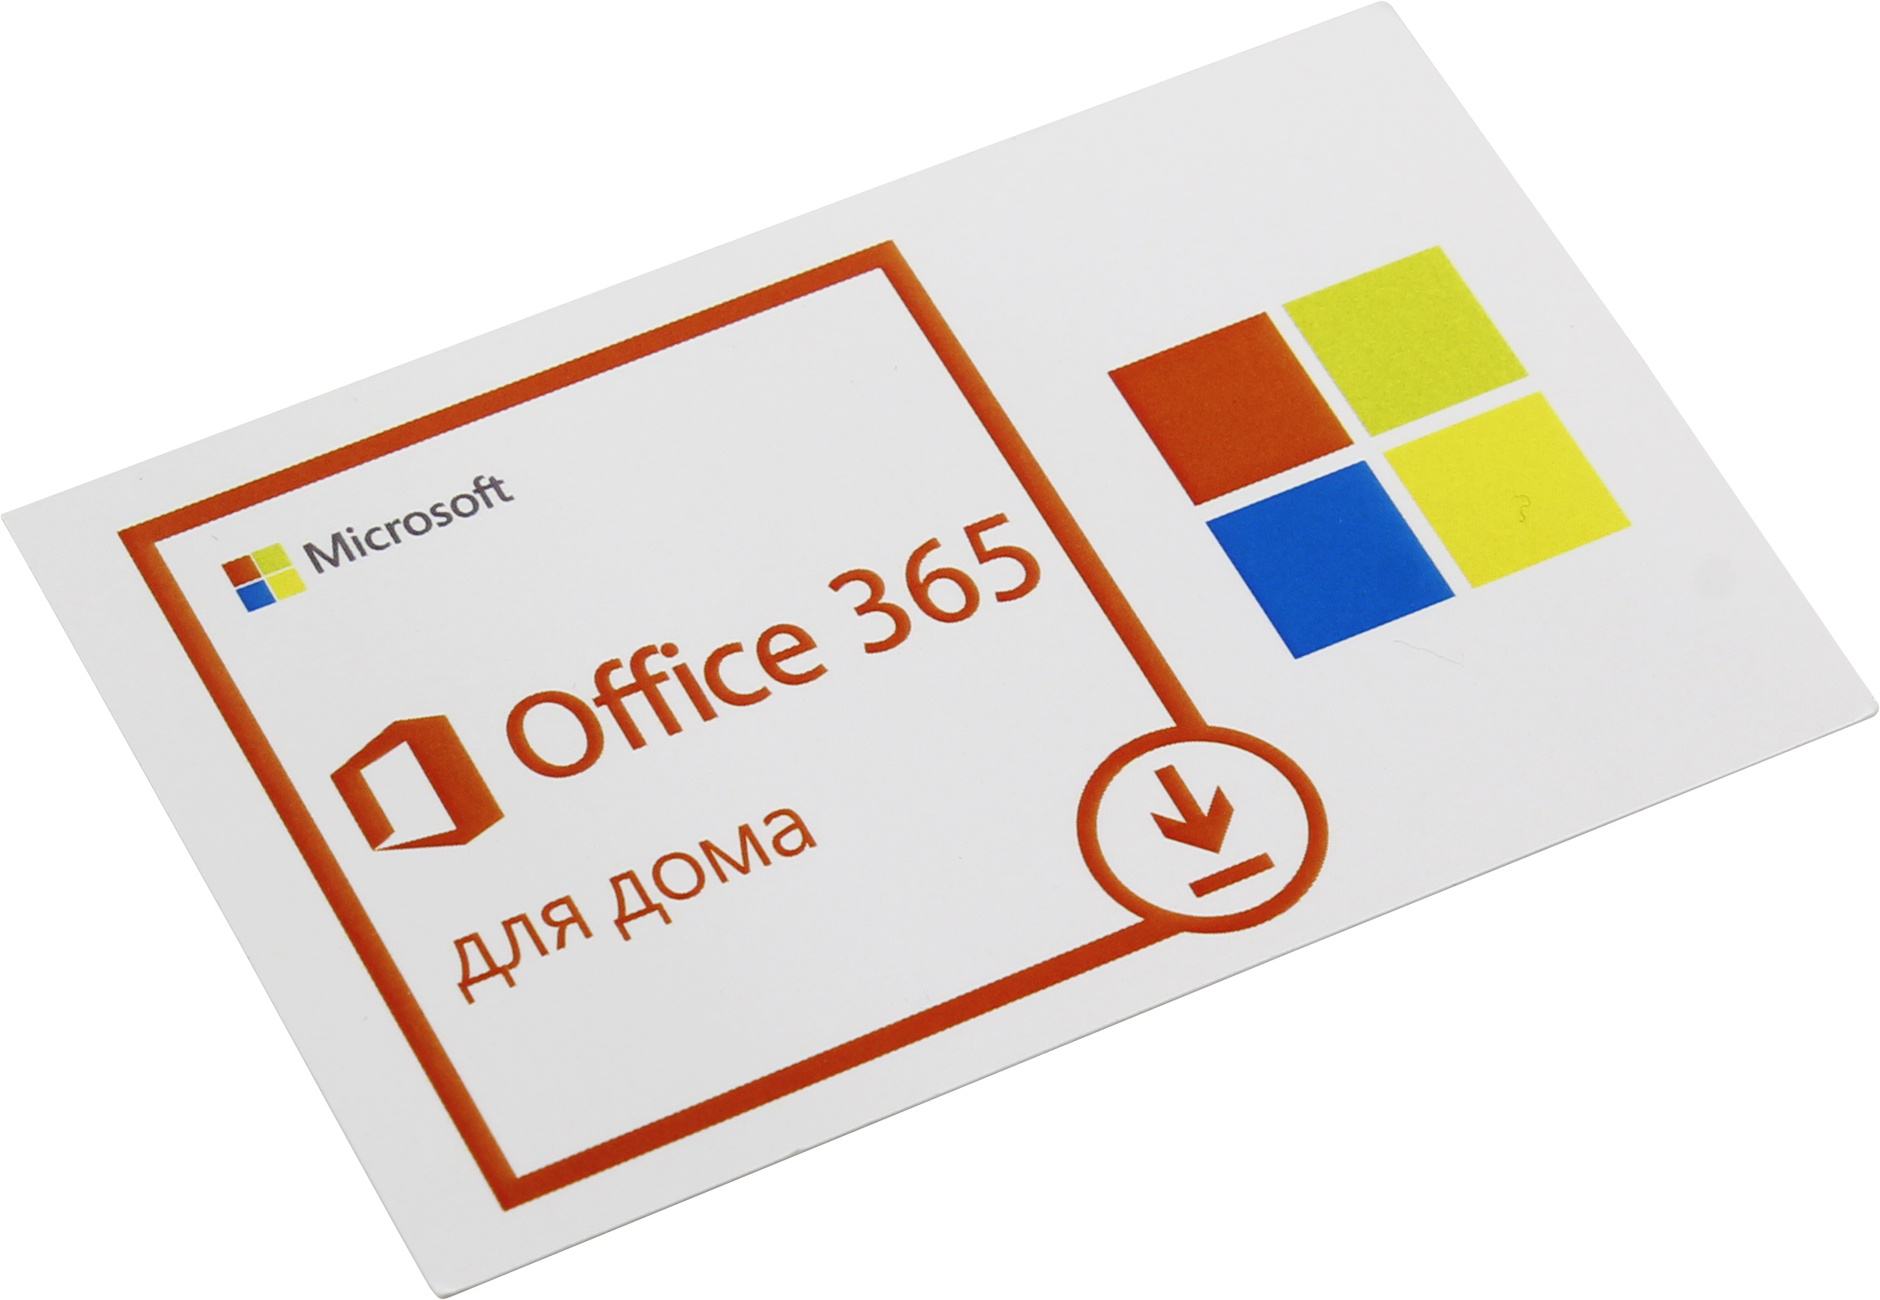 Office 365 tool